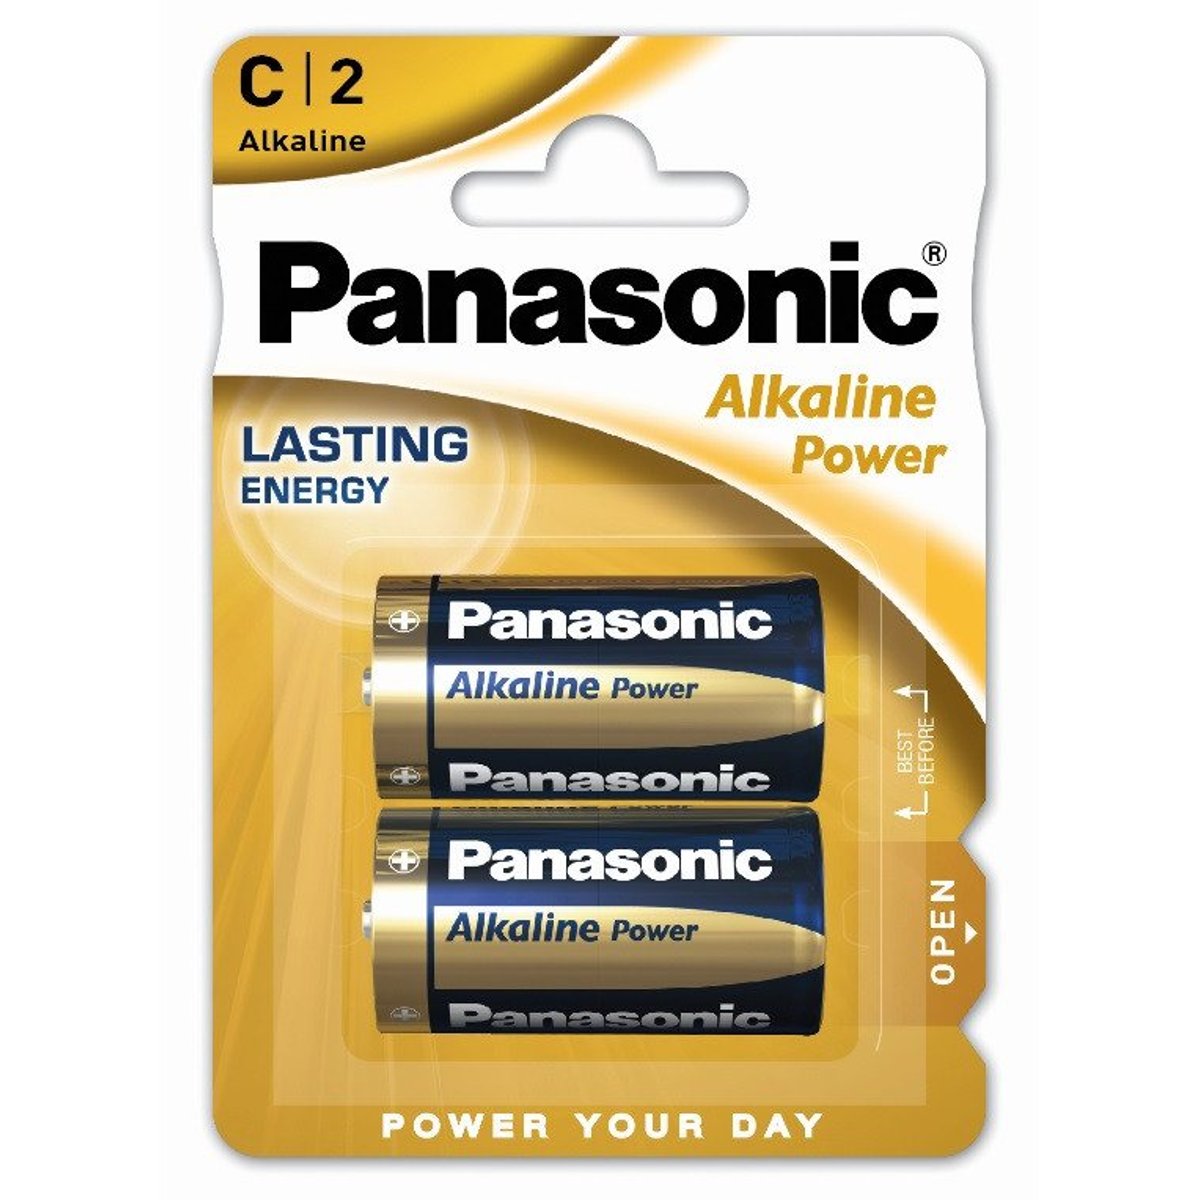 Panasonic Alkaline power C baterie